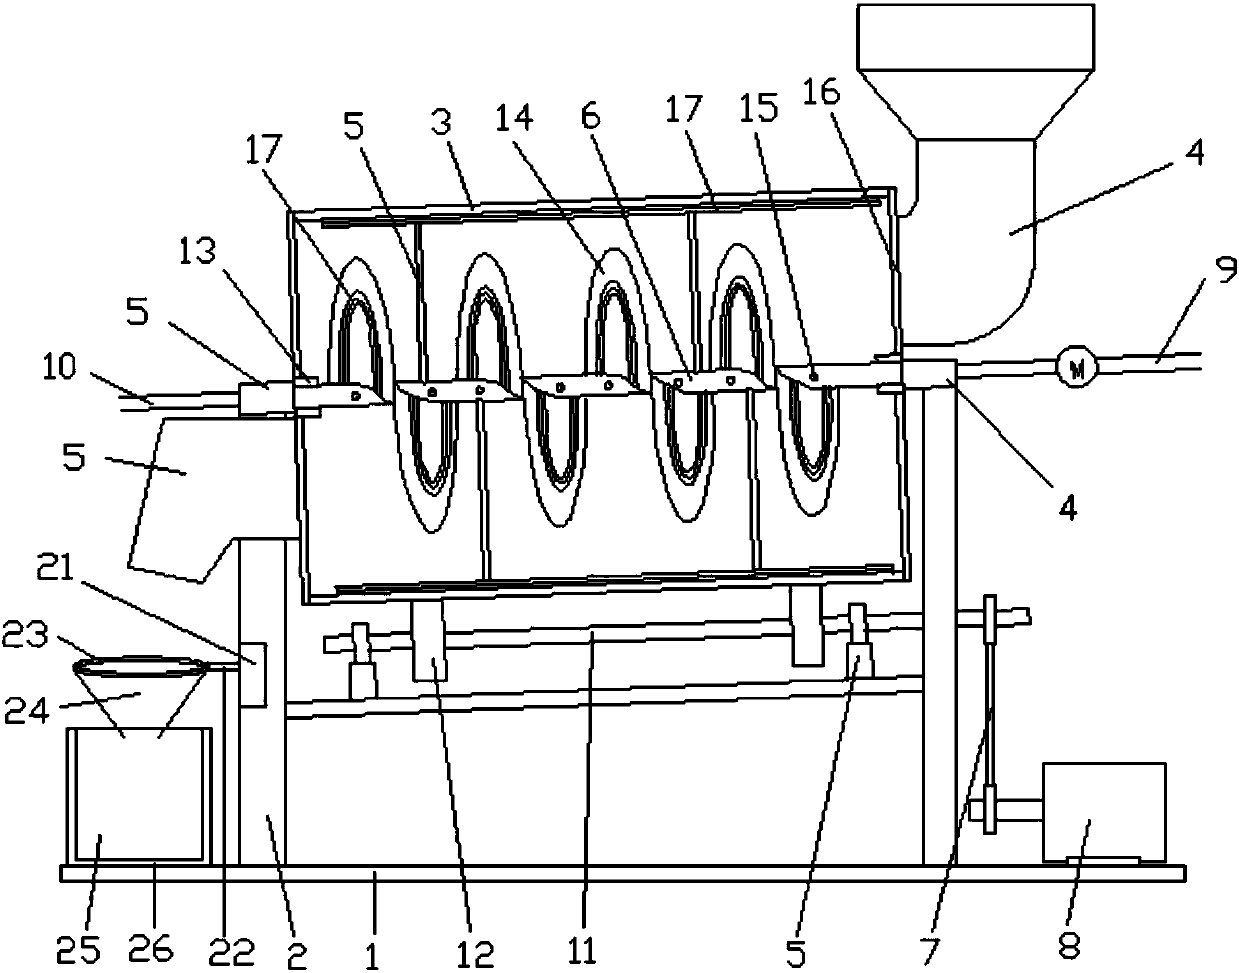 Rotary drum rotary-type drying granulating device